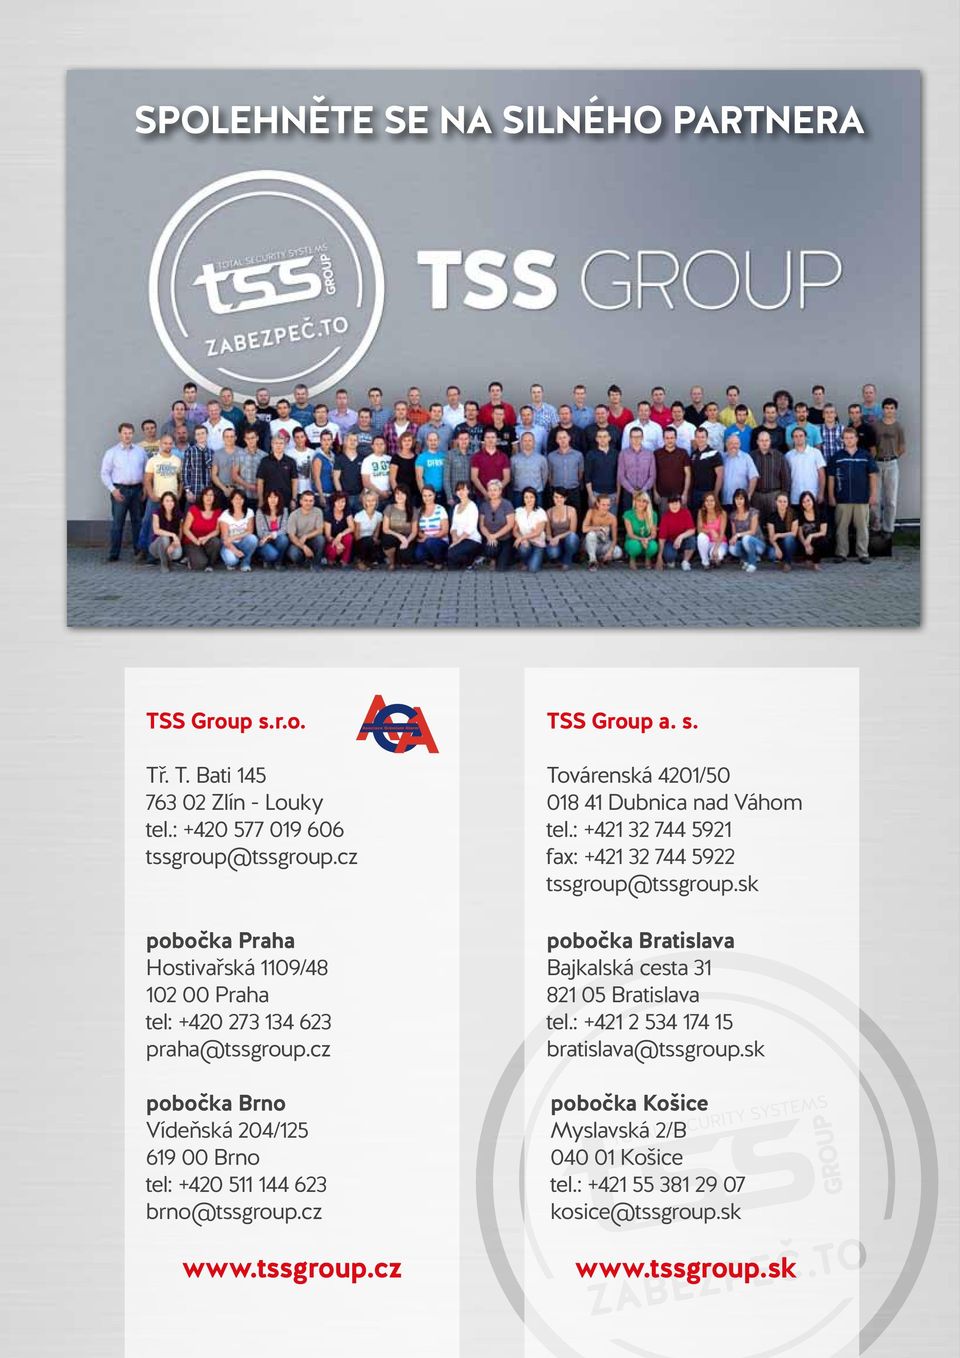 cz www.tssgroup.cz TSS Group a. s. Továrenská 4201/50 018 41 Dubnica nad Váhom tel.: +421 32 744 5921 fax: +421 32 744 5922 tssgroup@tssgroup.